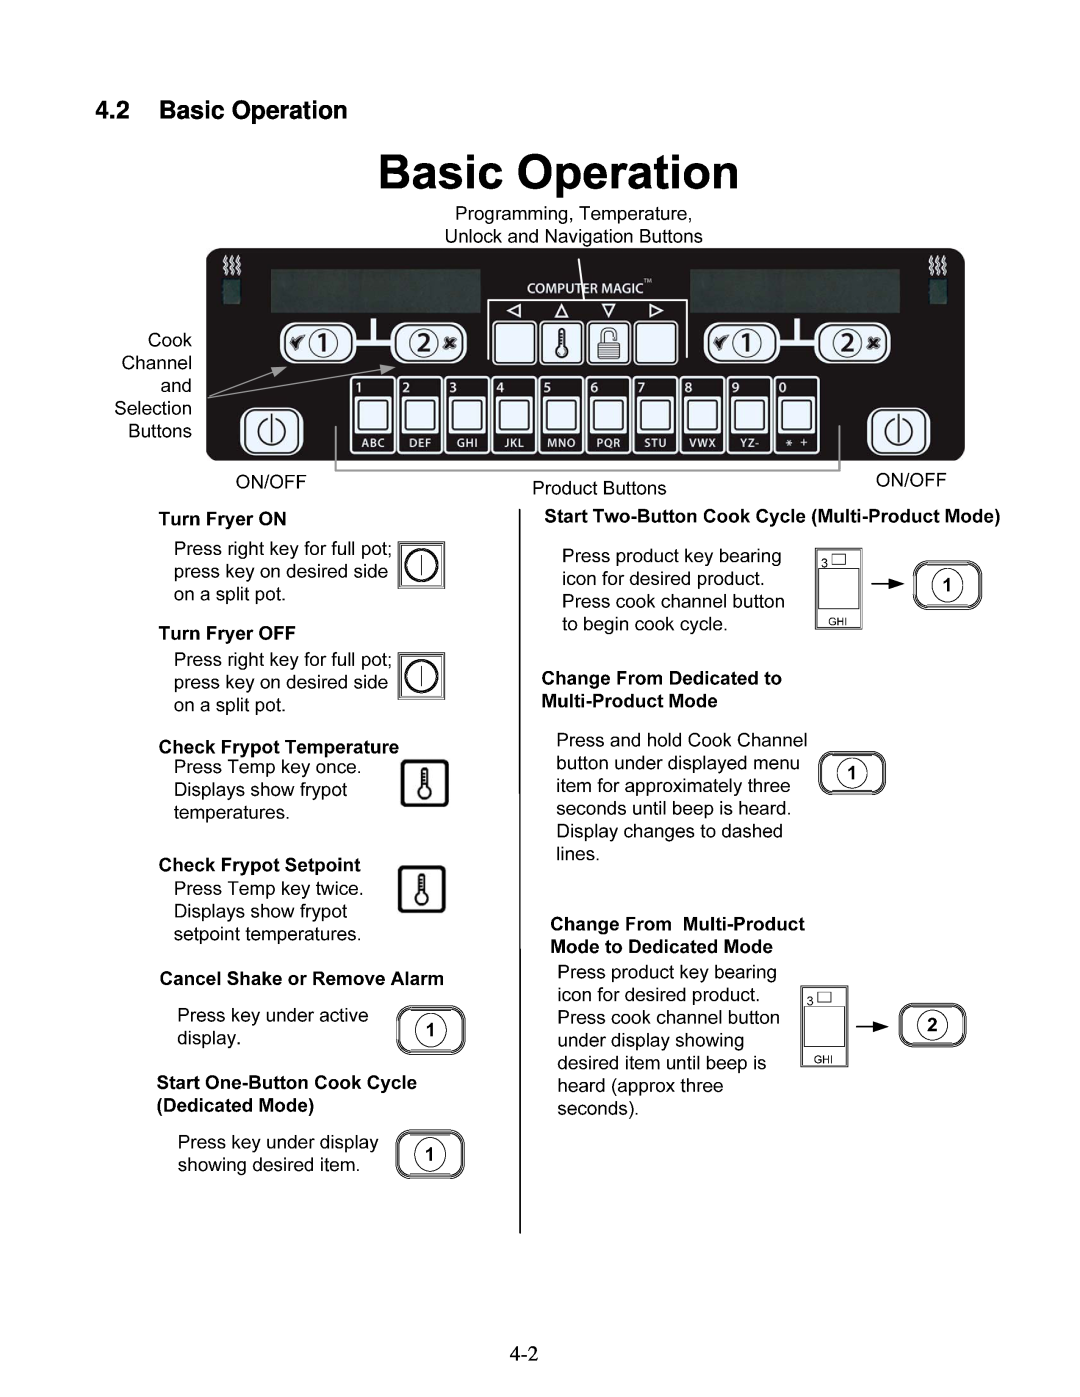 Frymaster Protector Series operation manual 4.2Basic Operation 